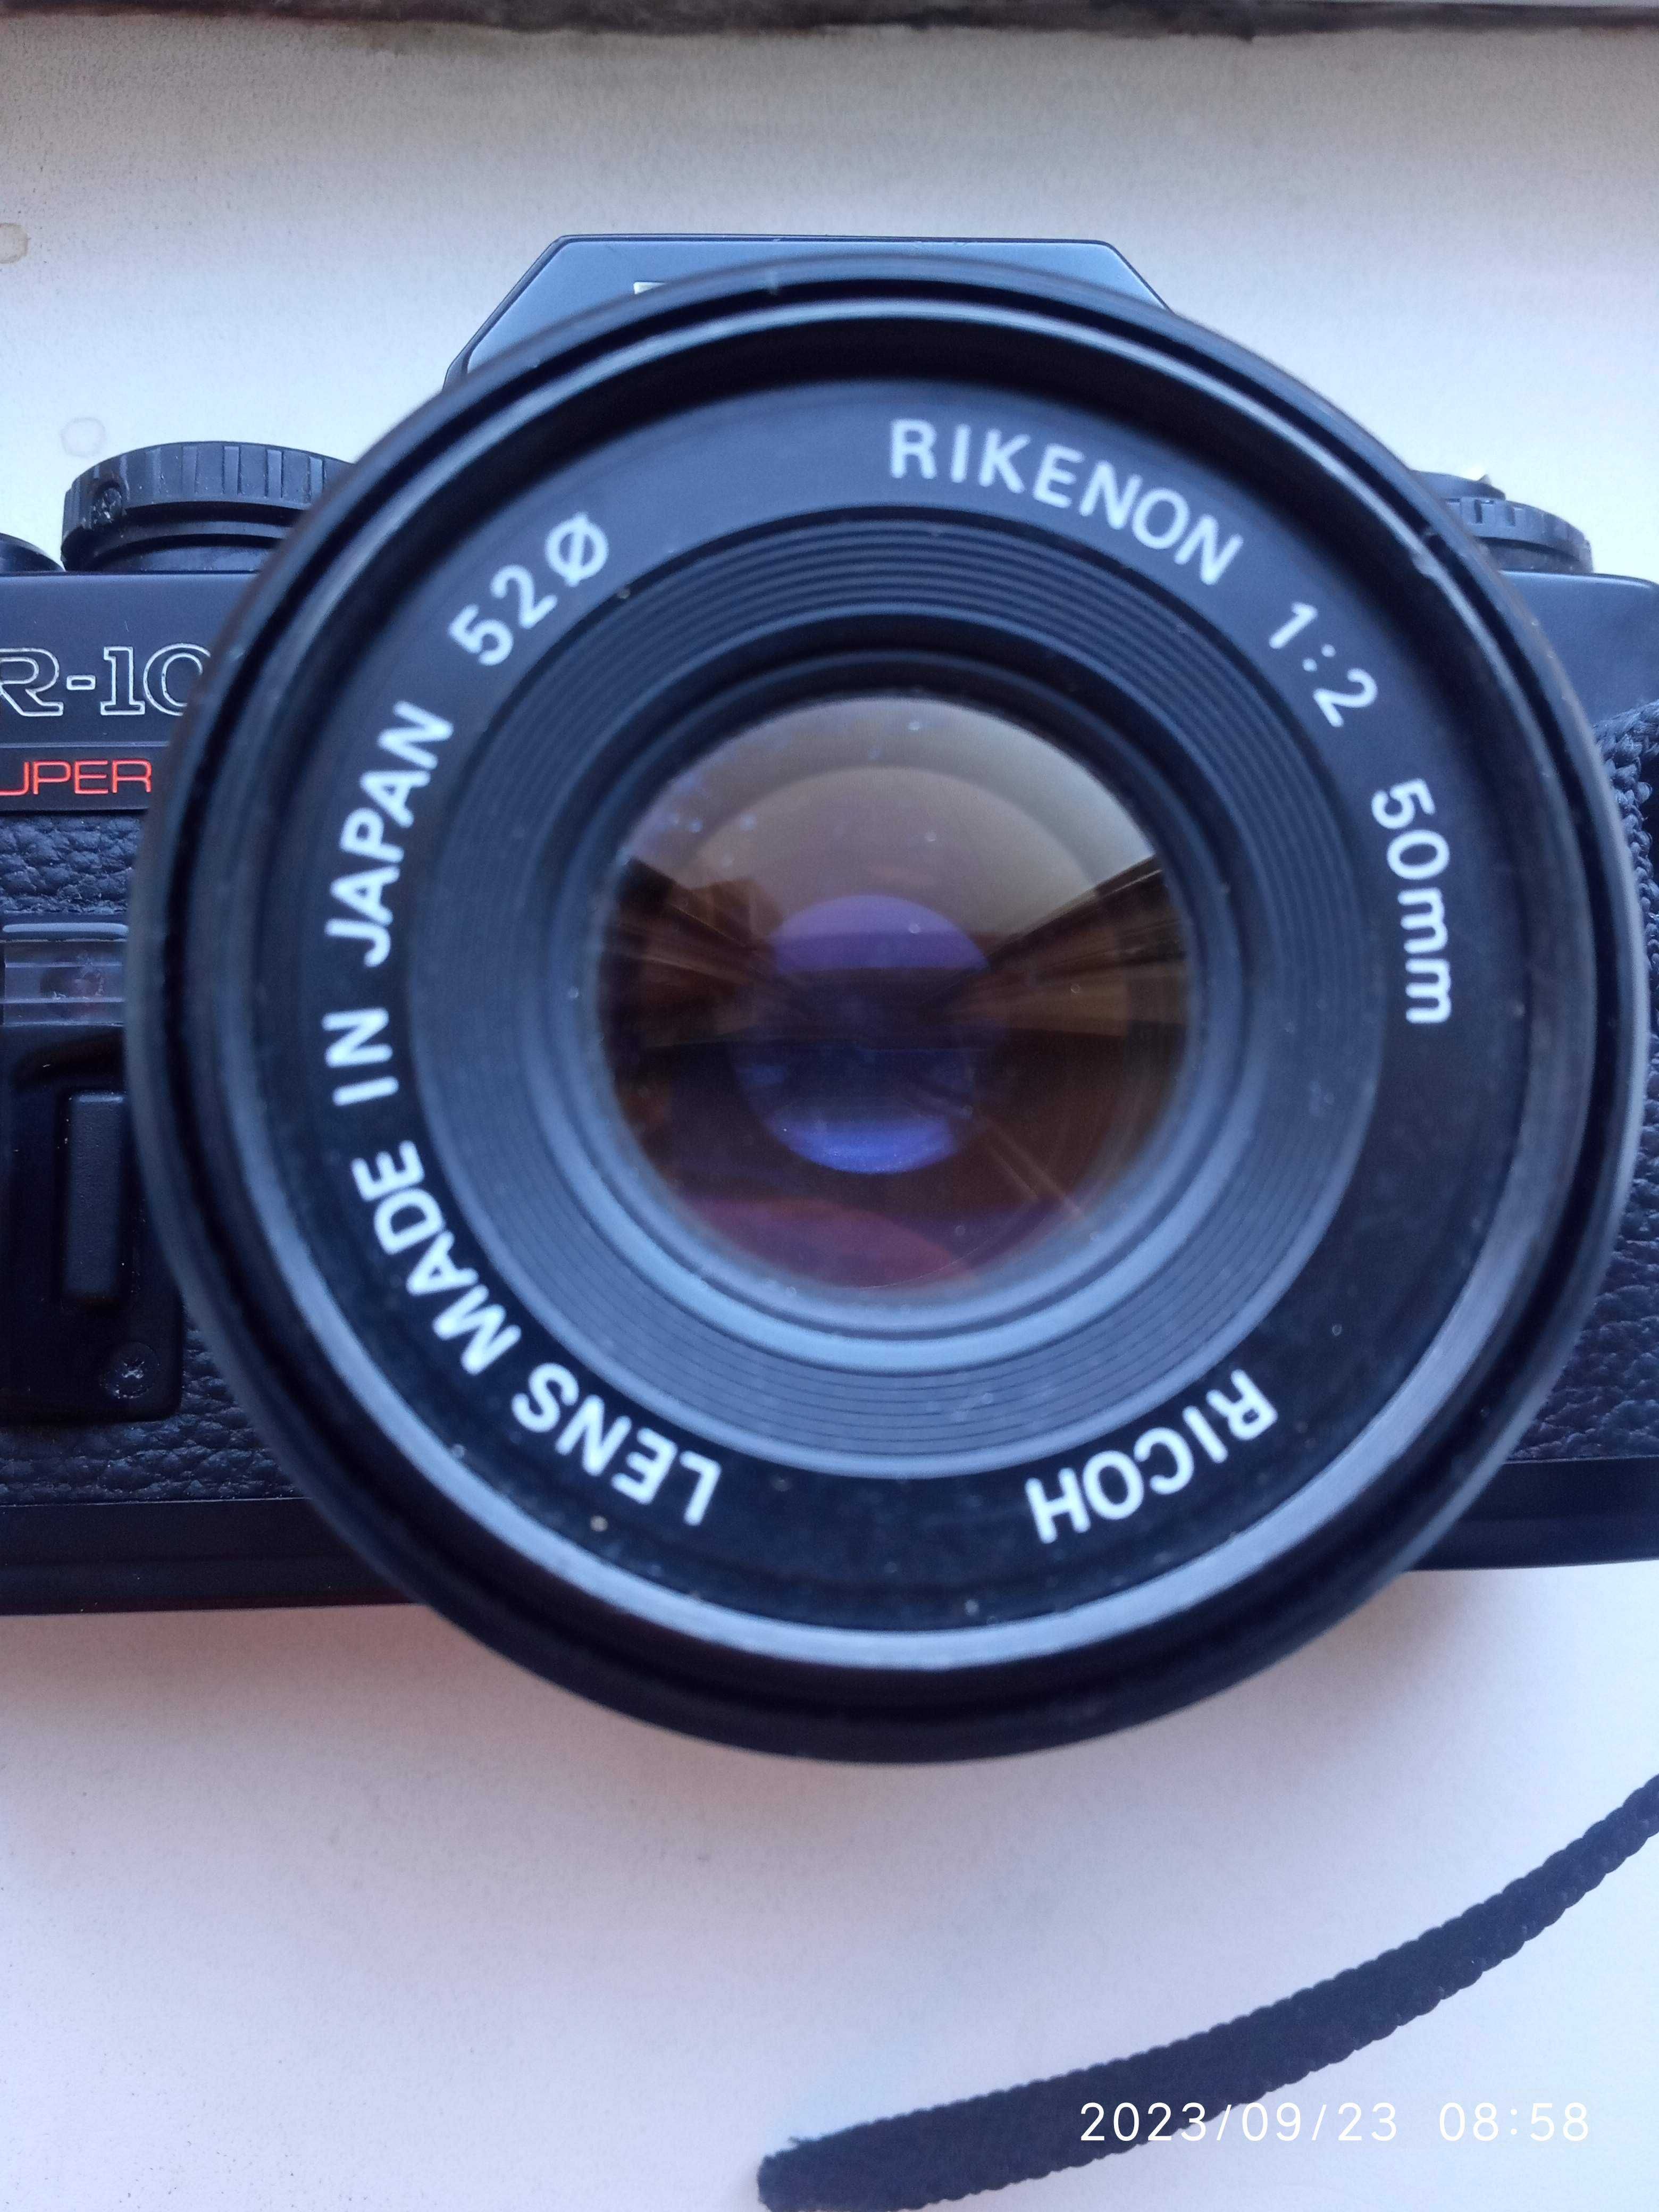 пленочный фотоаппарат RICON KR10 Super